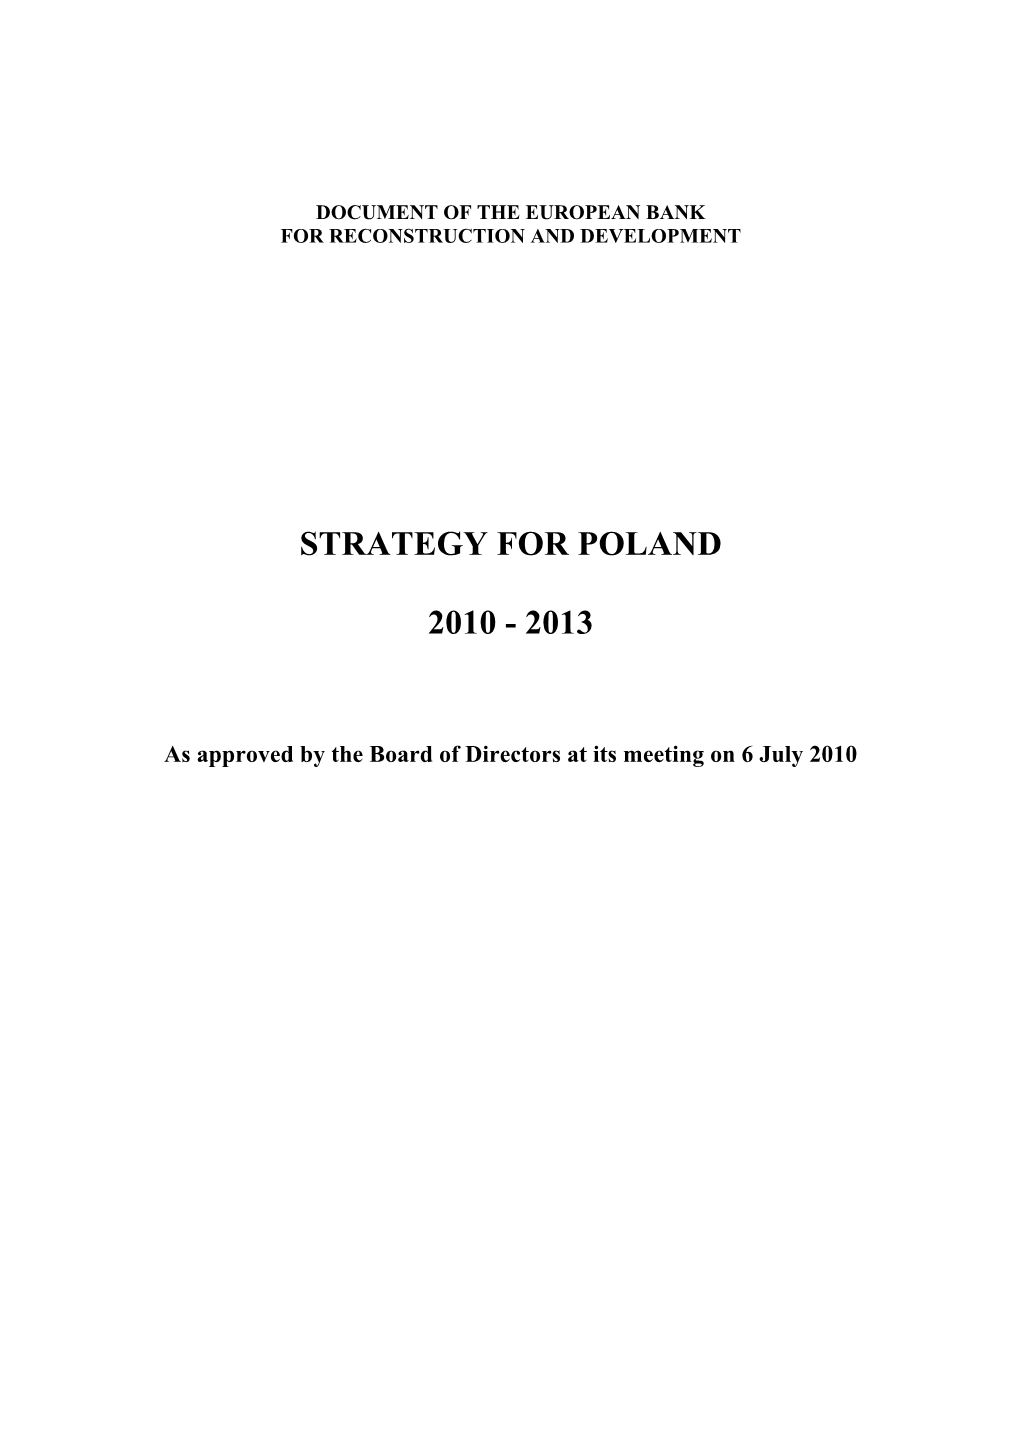 EBRD Strategy for Poland 2010